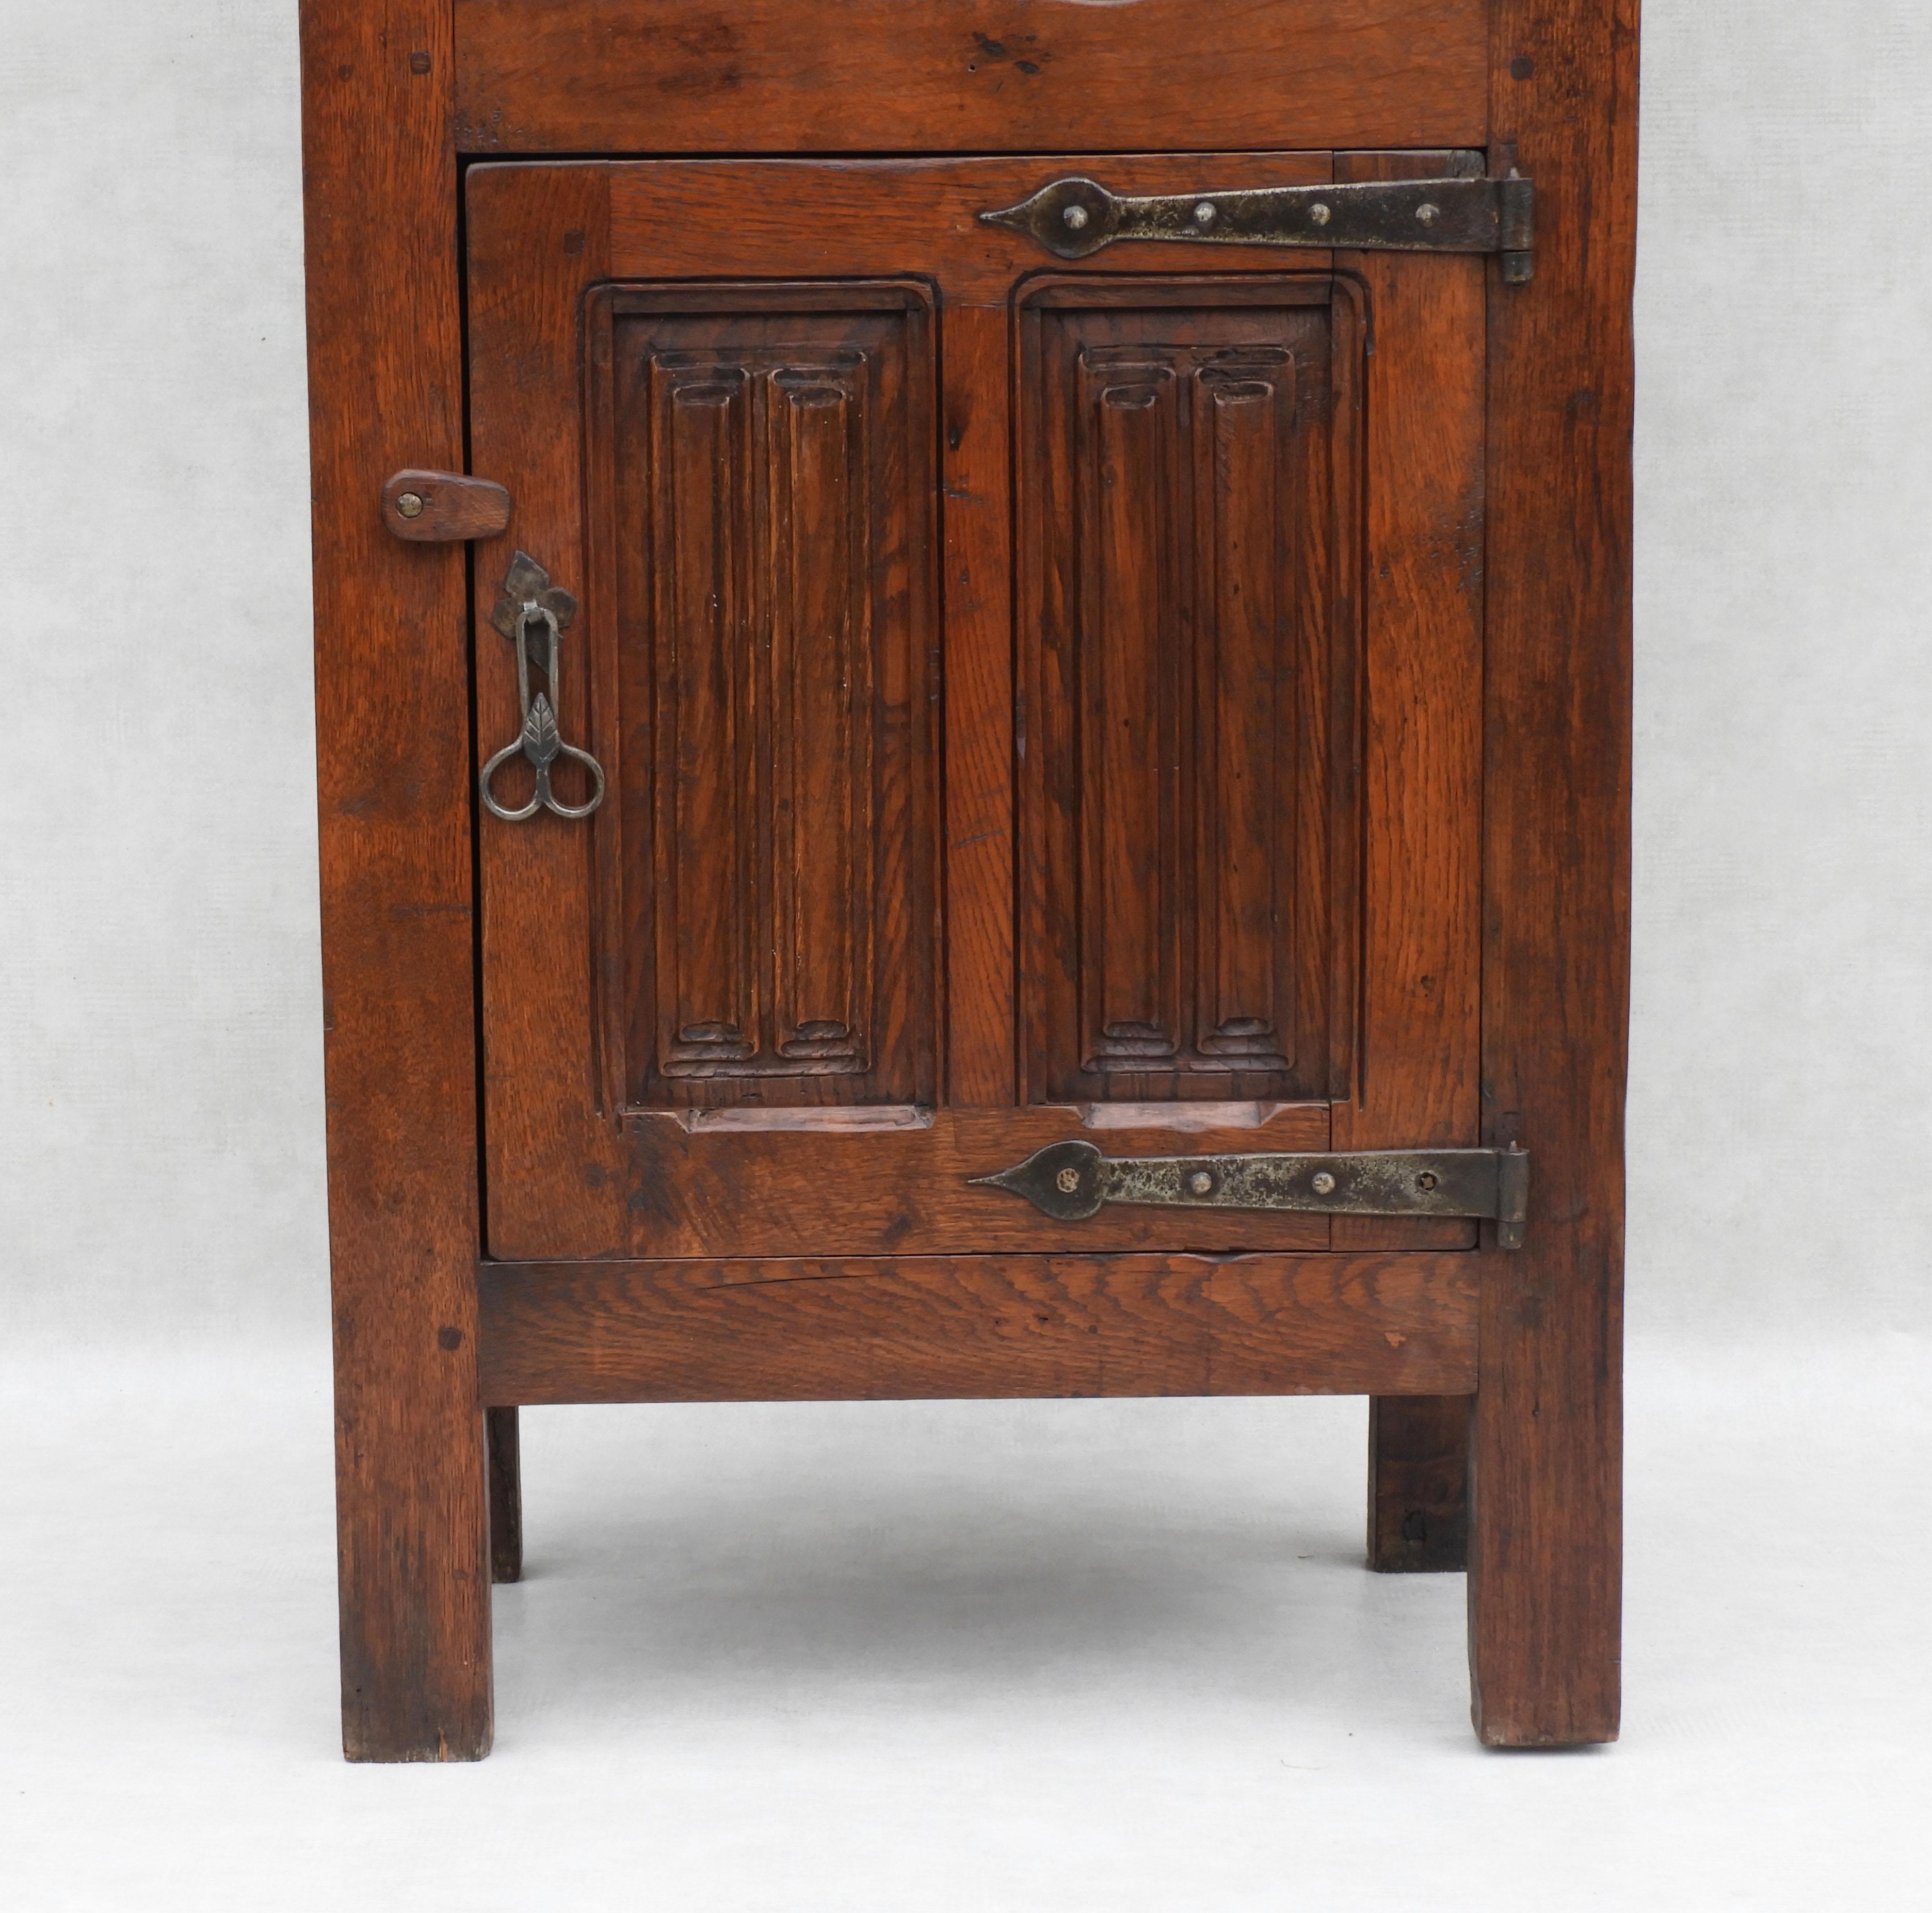 British Art and Crafts Oak Cabinet c1900